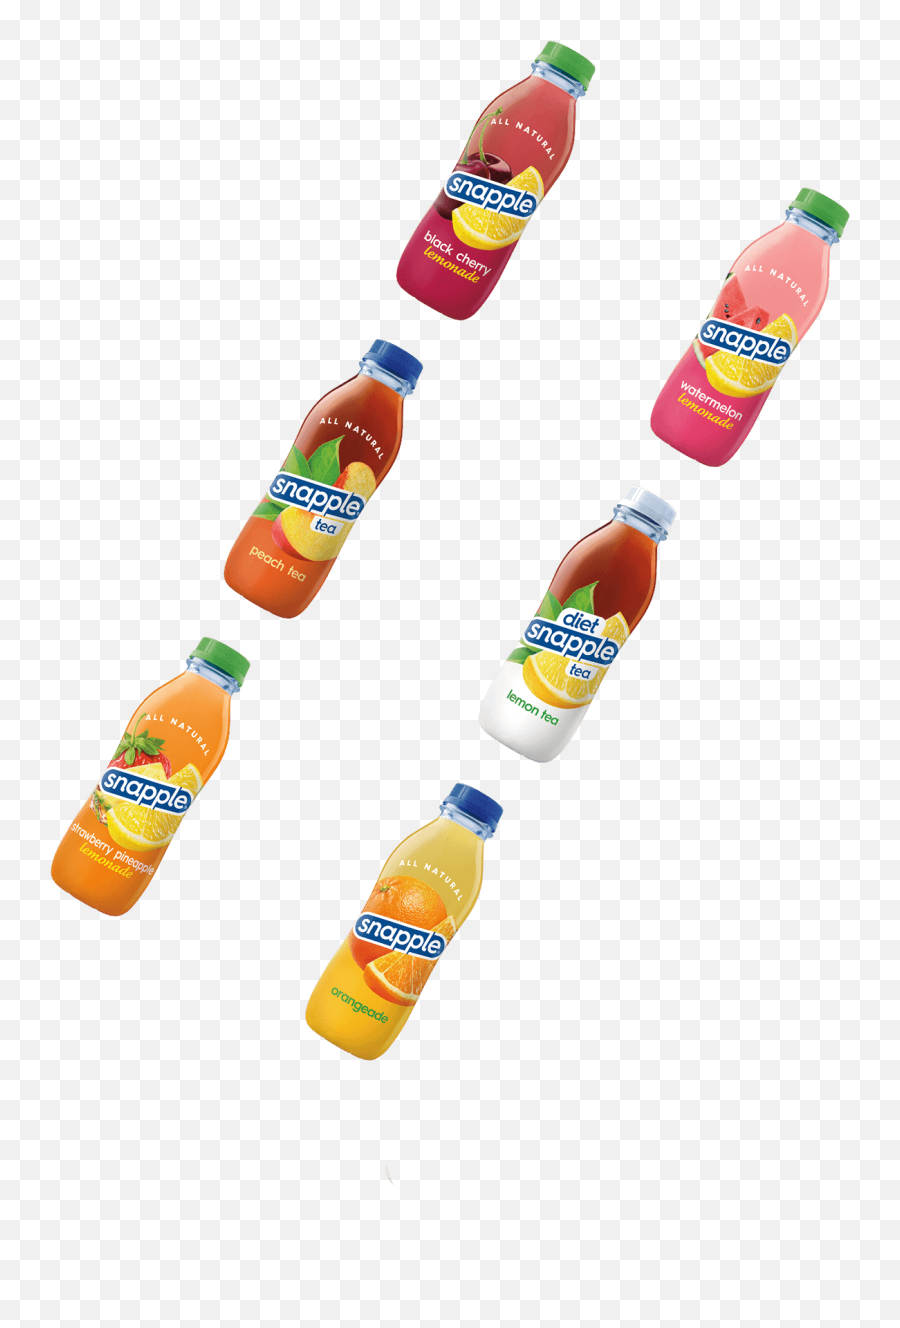 Snapple Juice Drinks U0026 Tea New Look Same Great Taste Emoji,Coke Bottle Emoticons